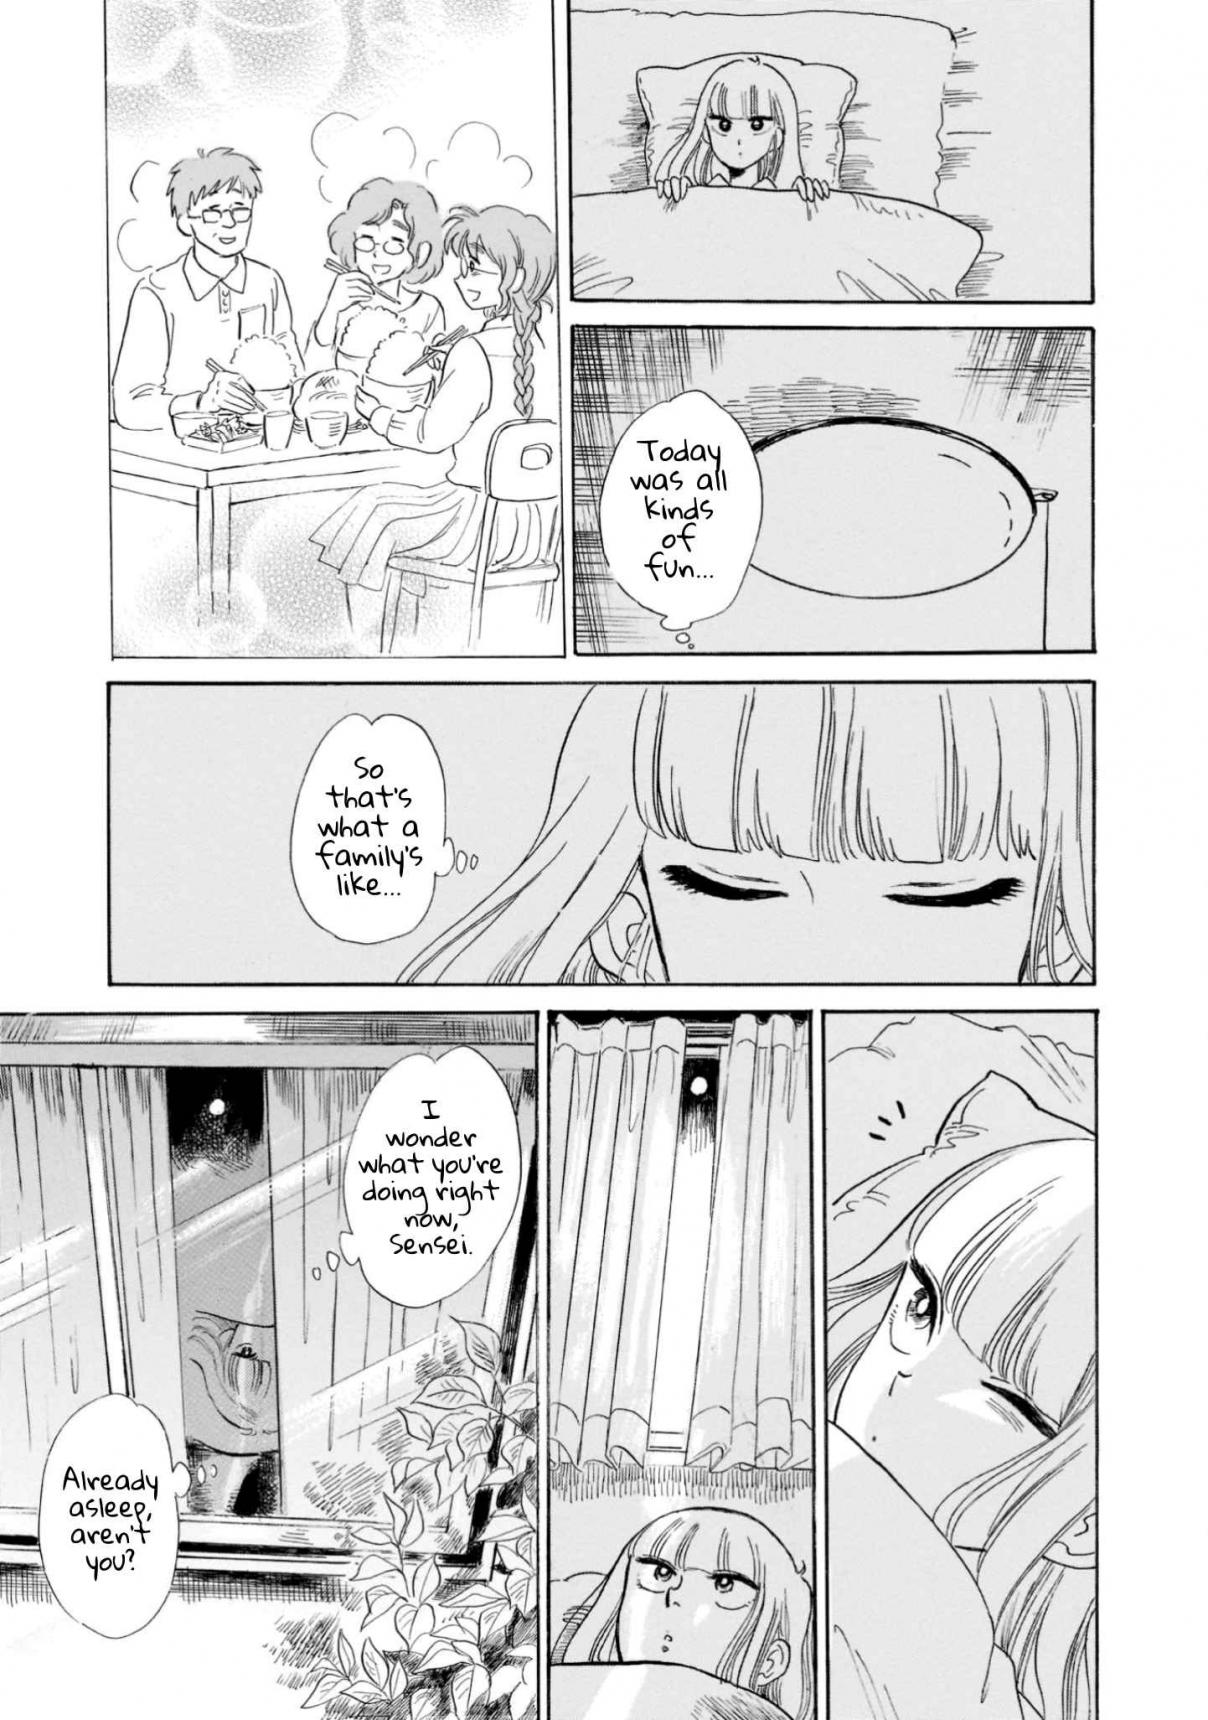 Shiota sensei to Amai chan Vol. 2 Ch. 22 Socializing